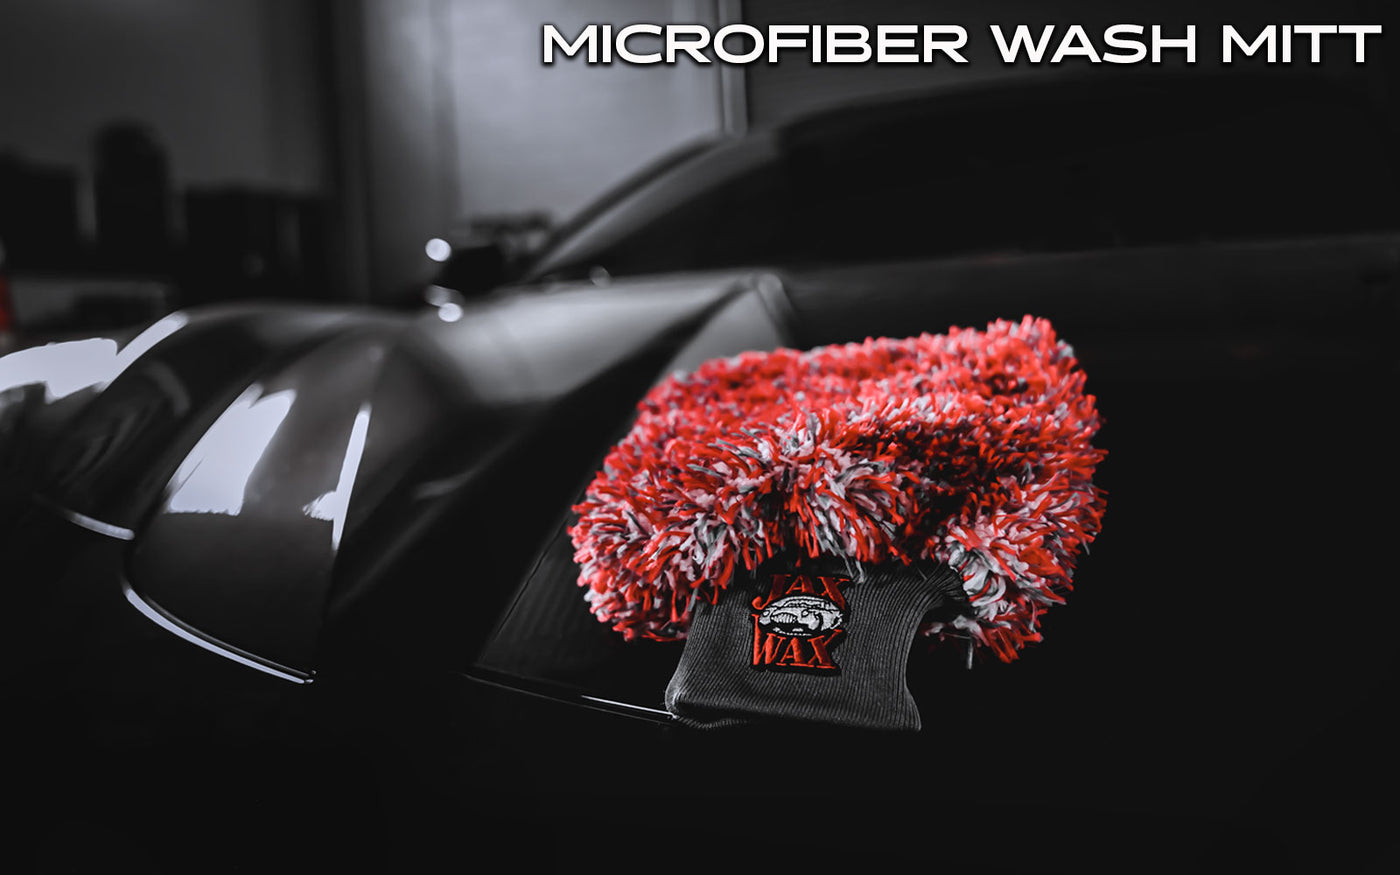 Jax Wax, Microfiber Wash Mitt, Car Washing, Microfiber